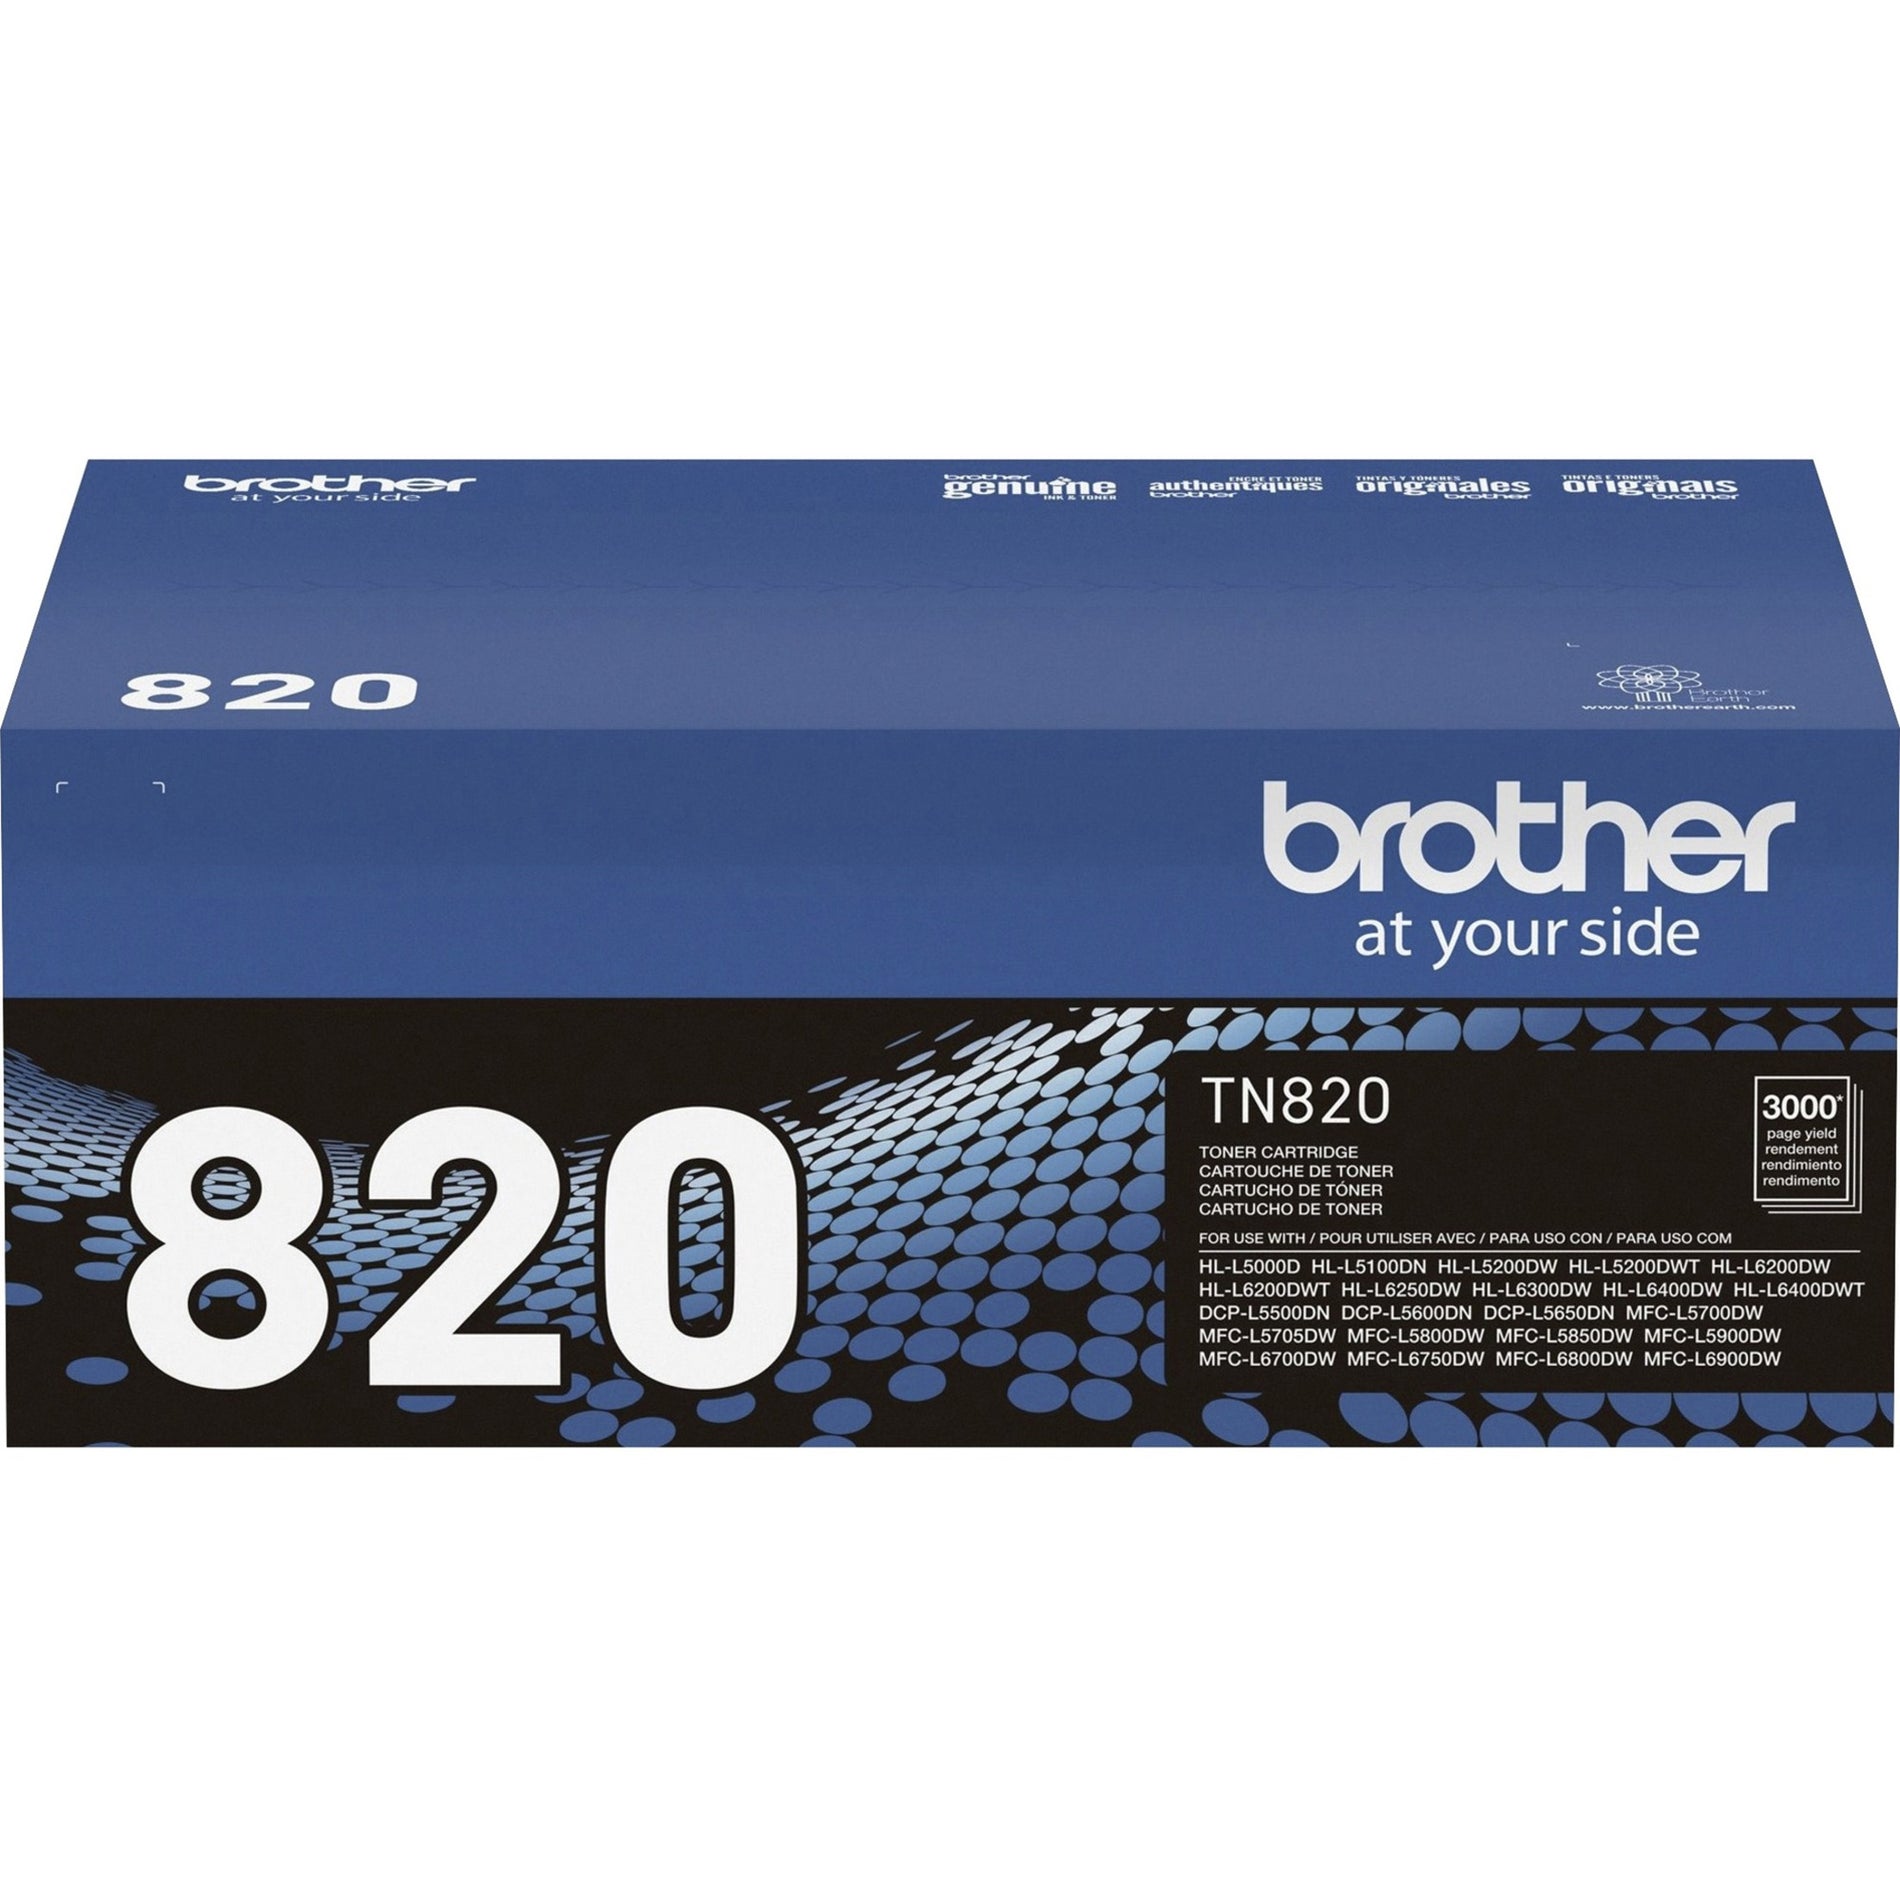 Brother TN820 Toner Cartridge, 3000 Page Yield, Black